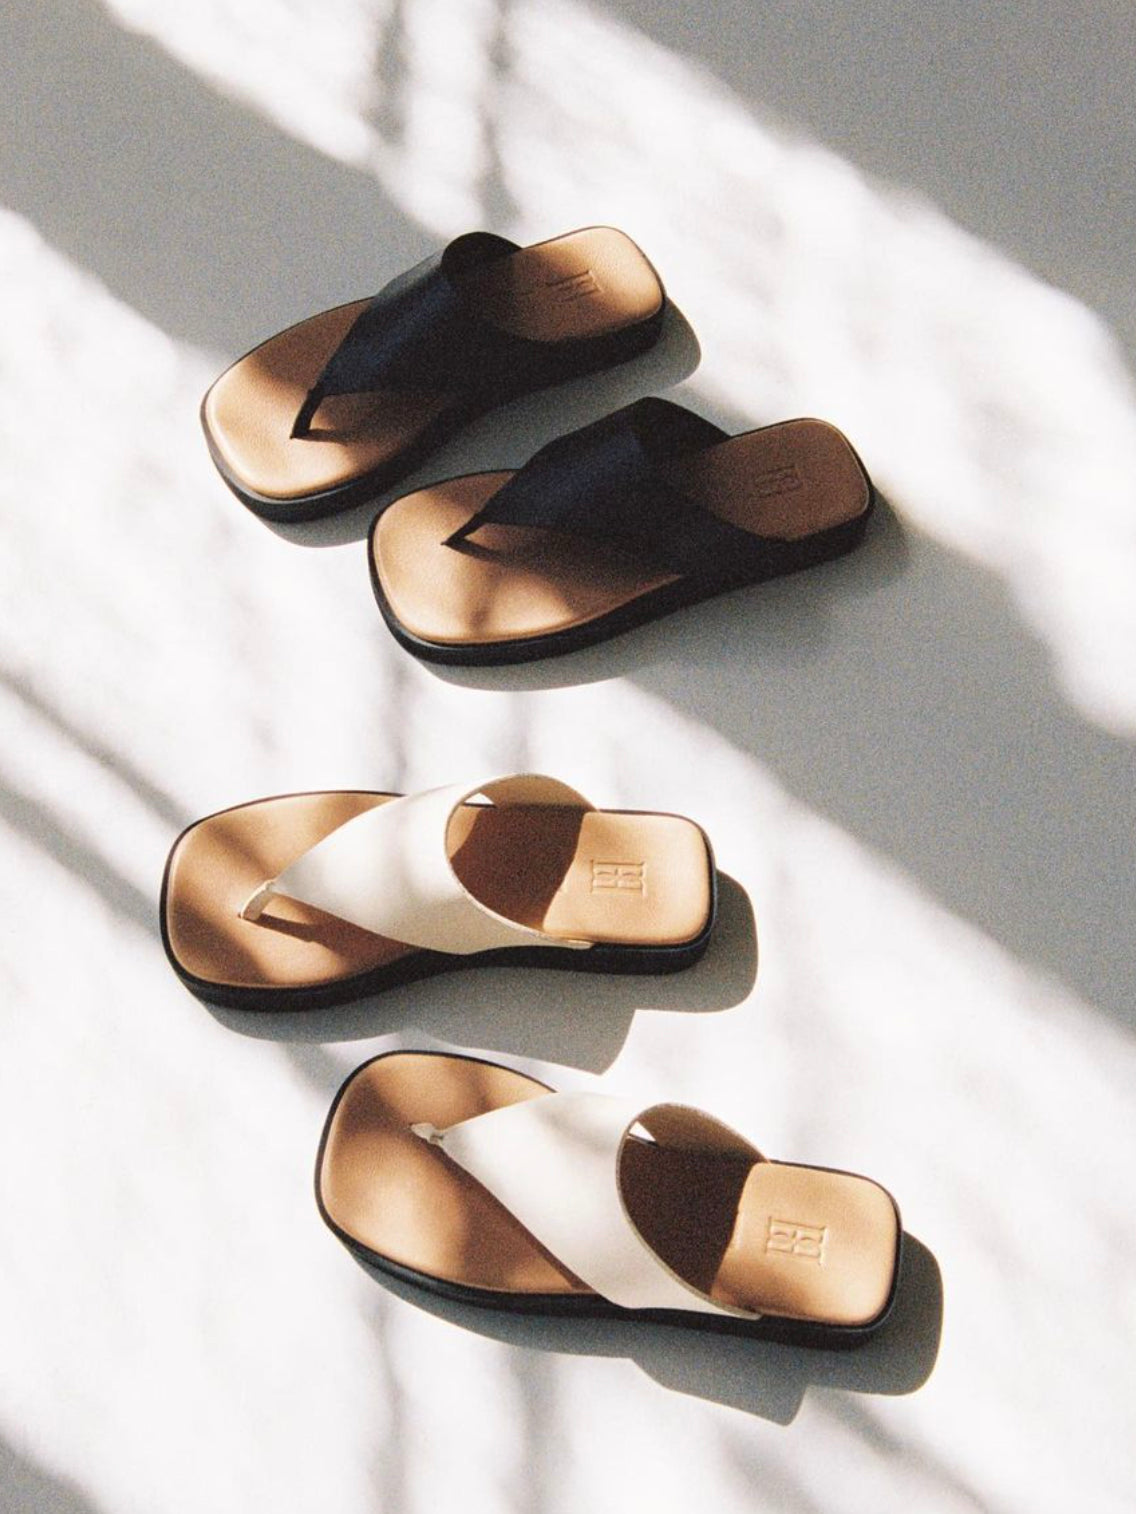 Marisol flip flop leather sandals, vanilla cream